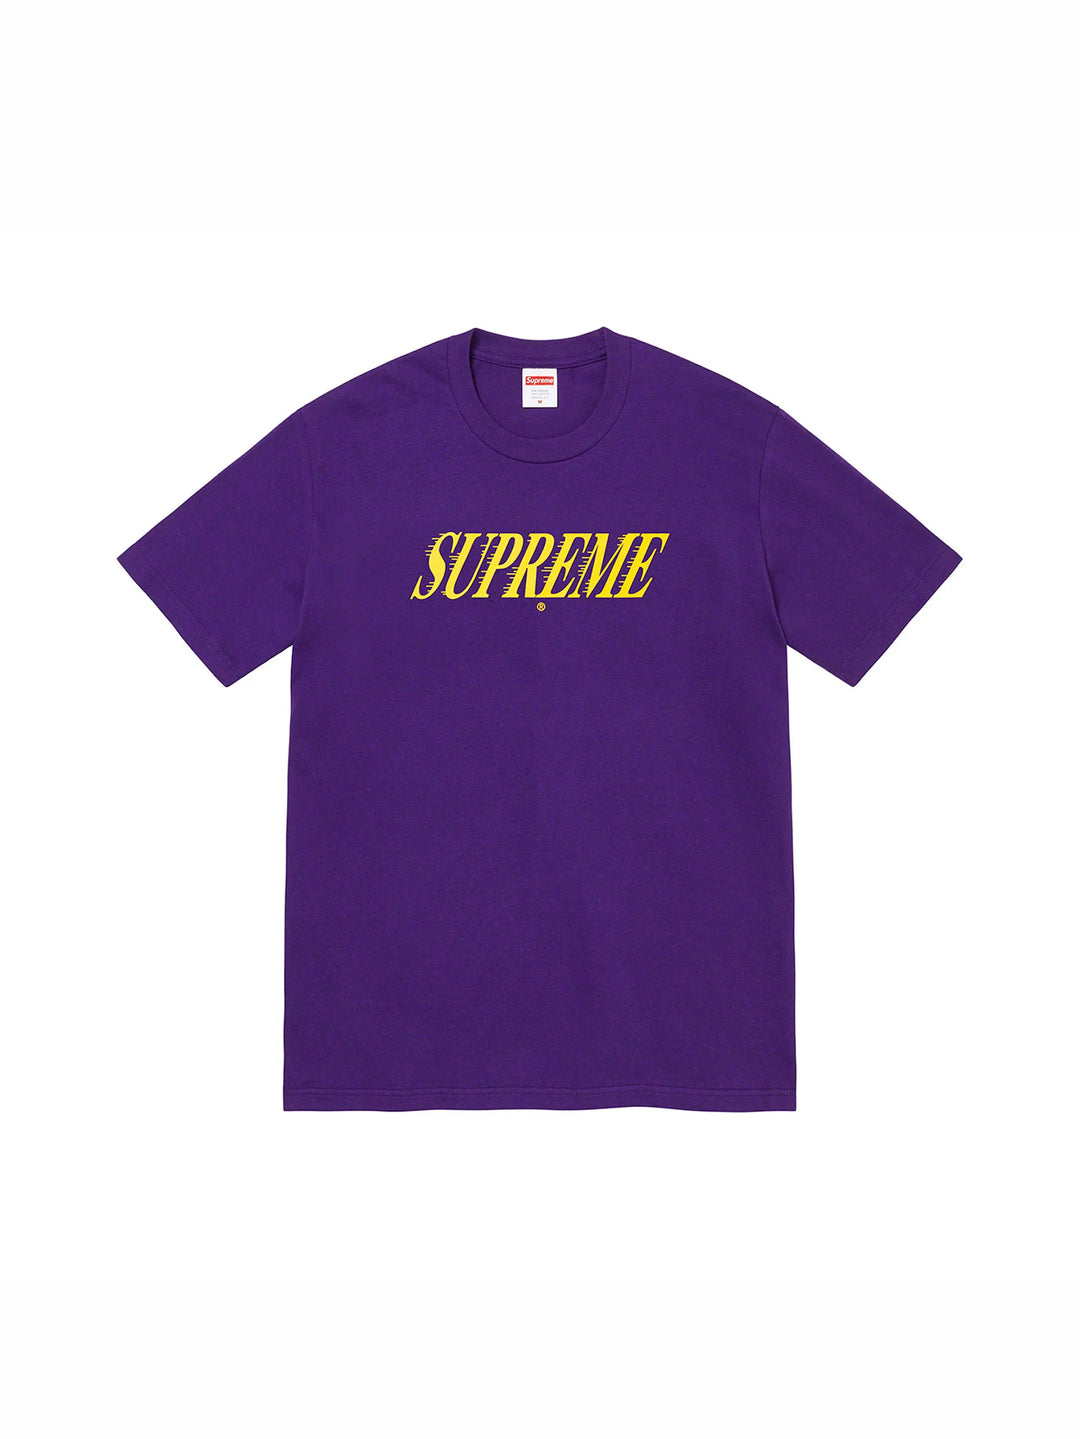 Supreme Slap Shot Tee Purple in Melbourne, Australia - Prior